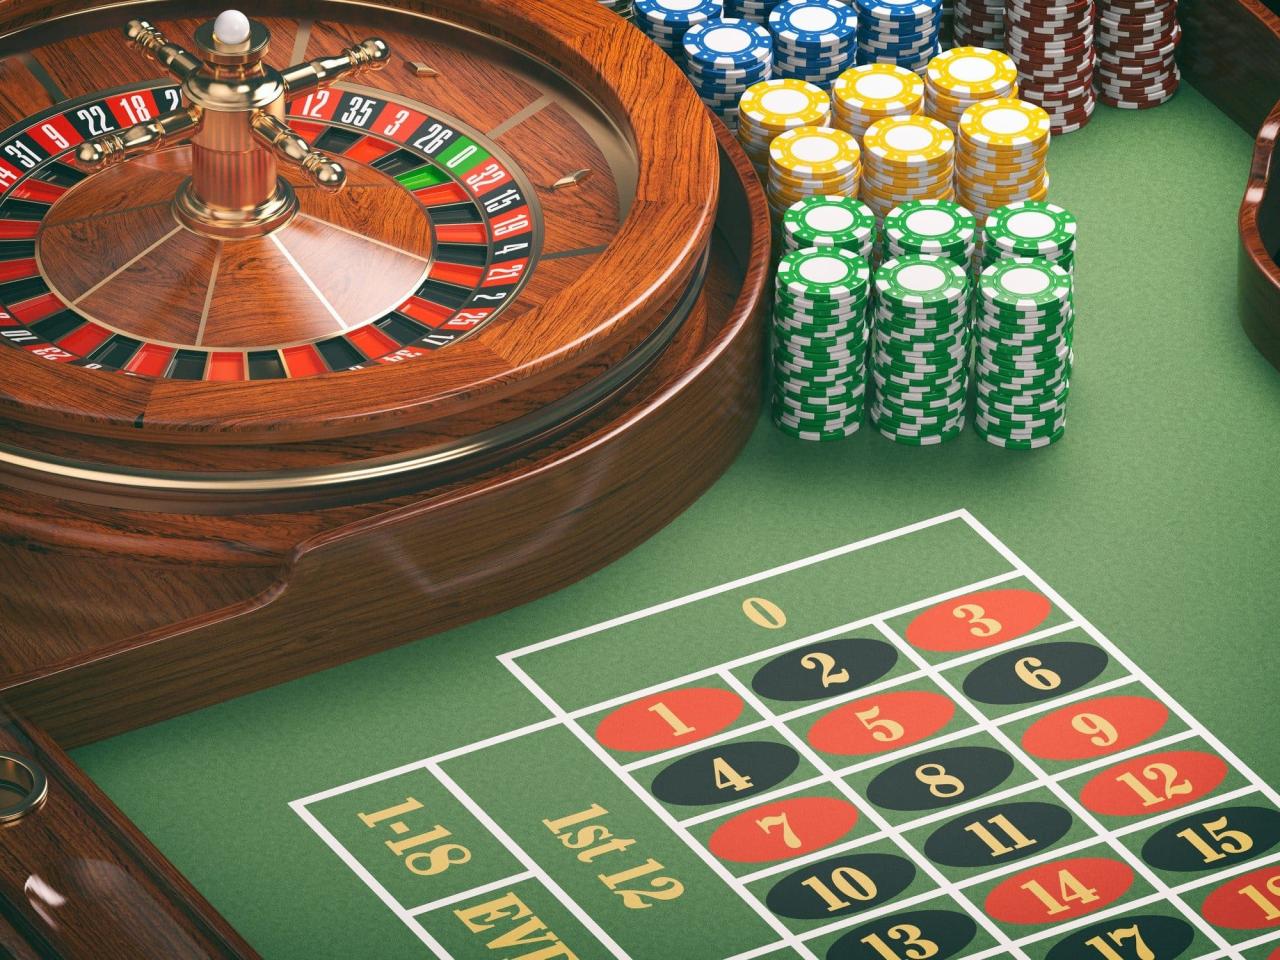 Slots Capital Casino-n Slots mundu zirraragarria